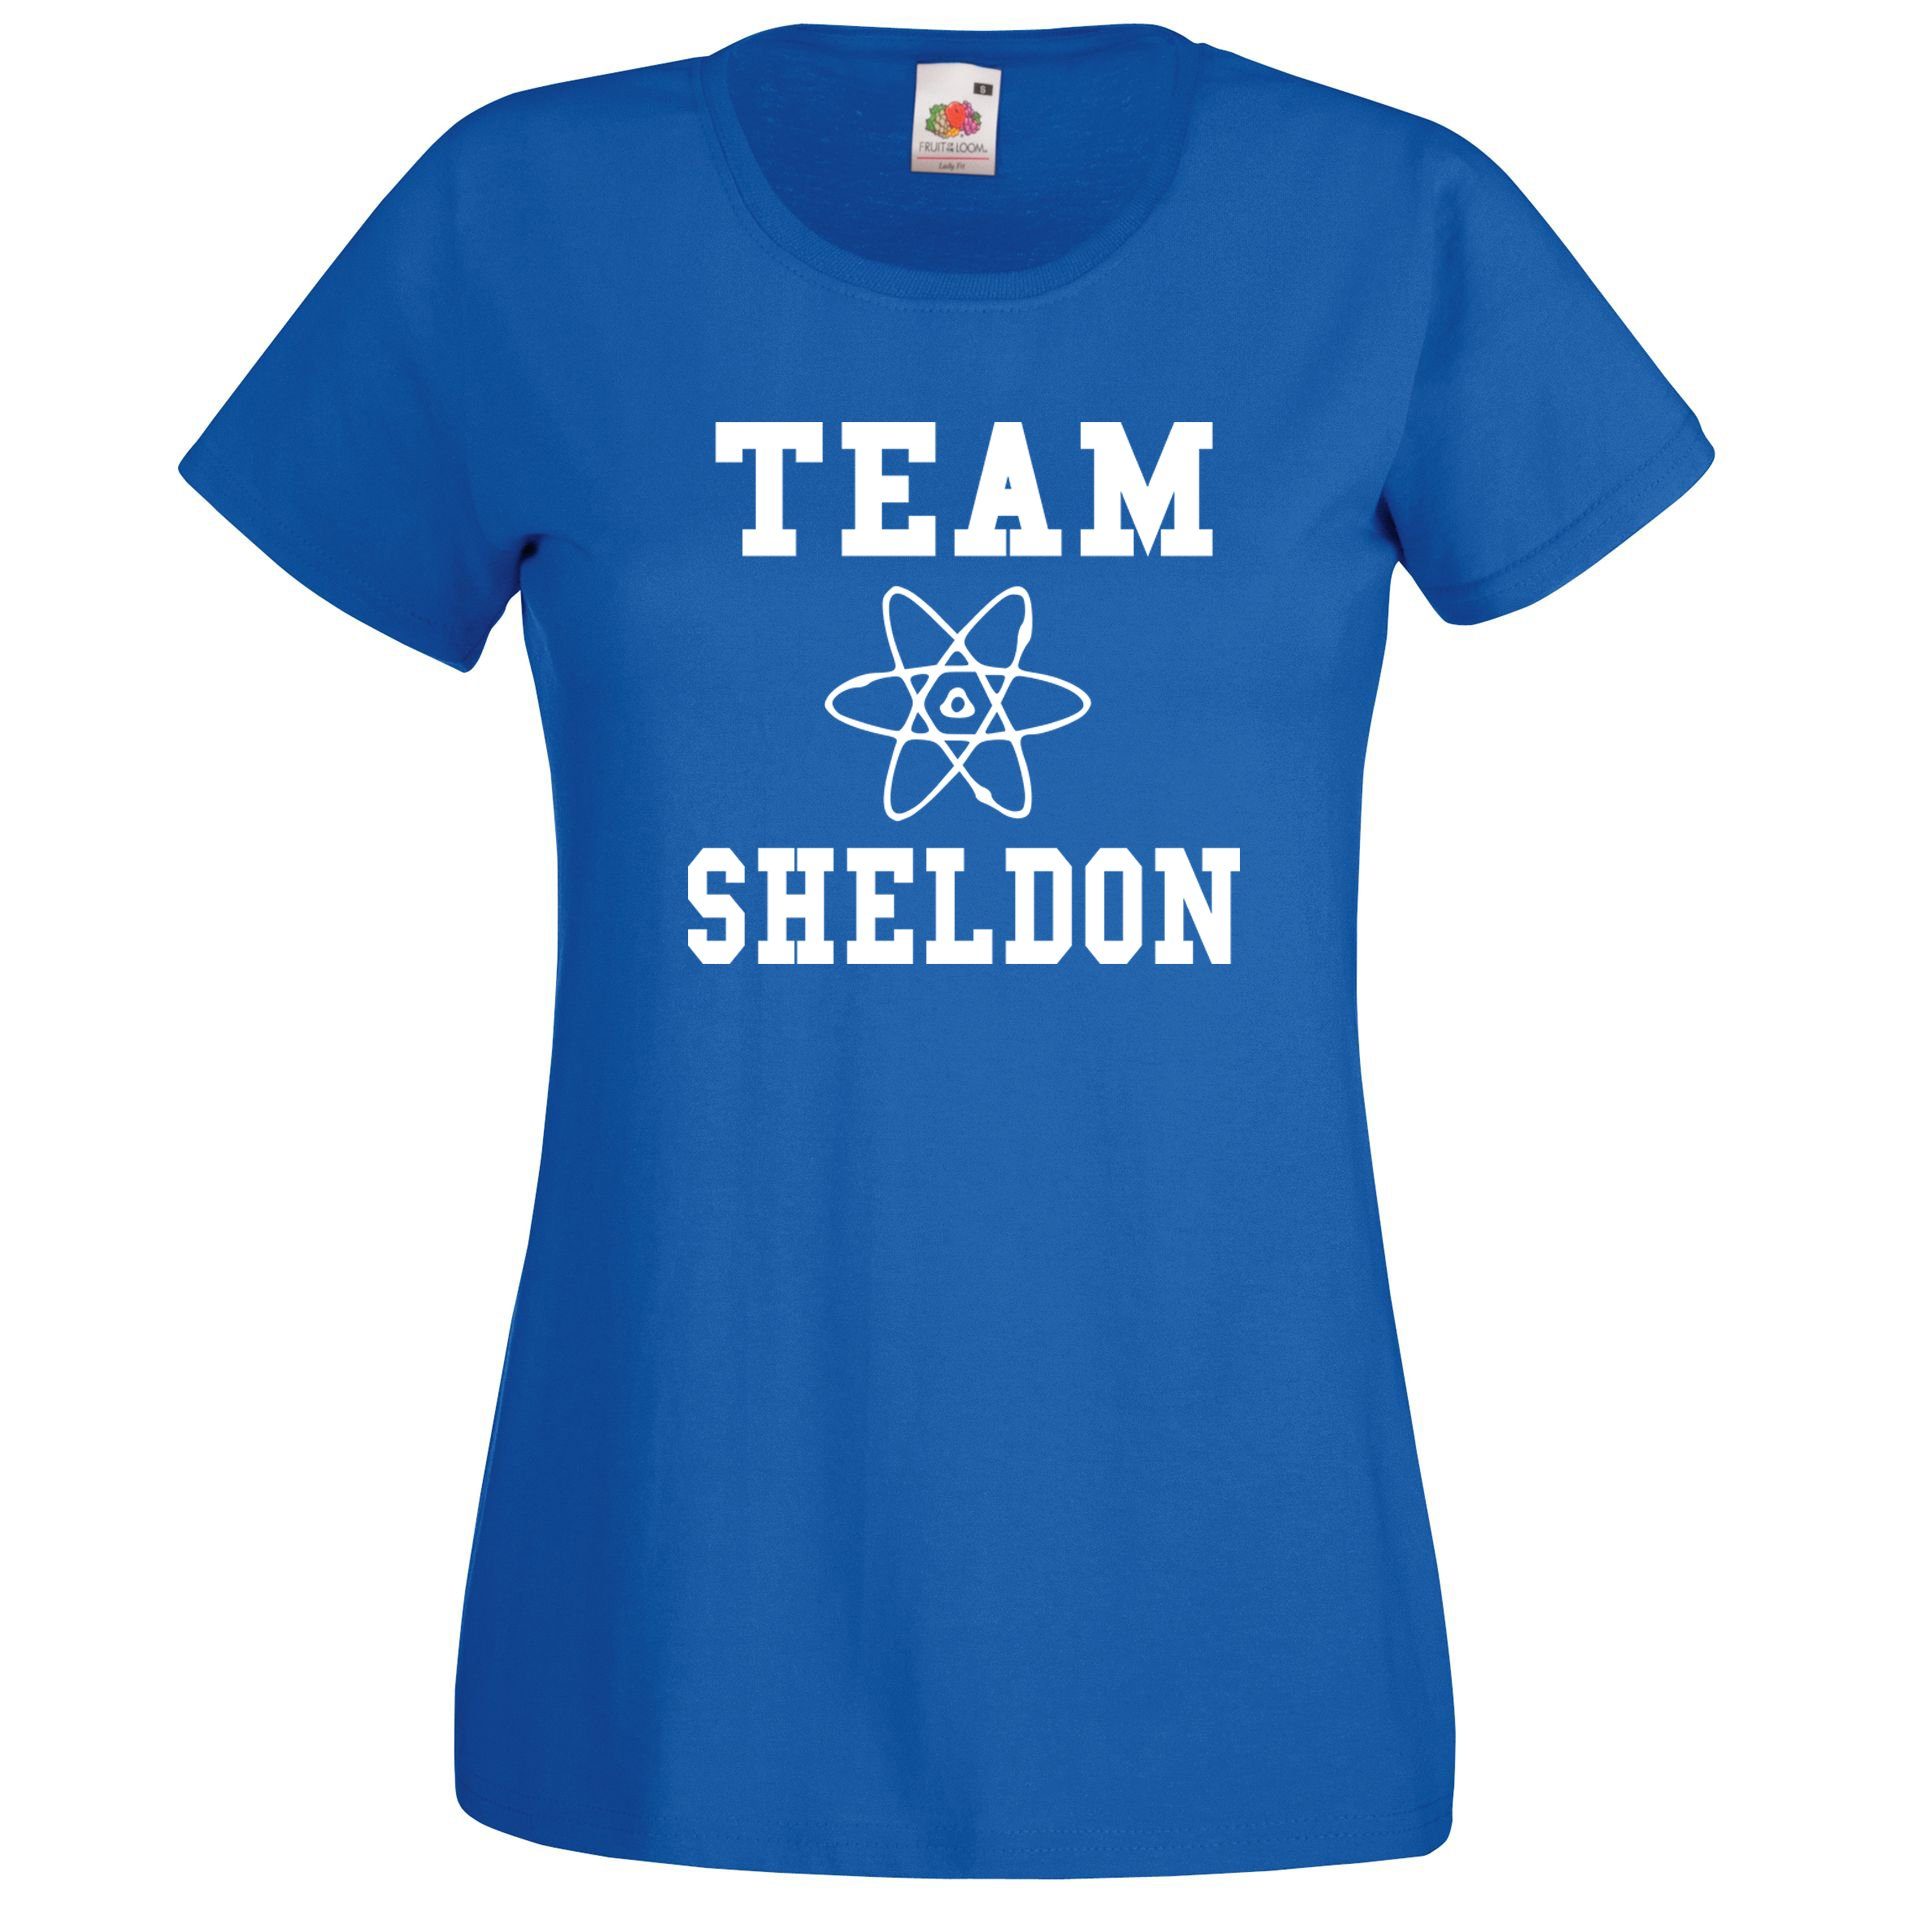 Royalblau trendigem Team Damen Designz mit Sheldon T-Shirt T-Shirt Motiv Youth